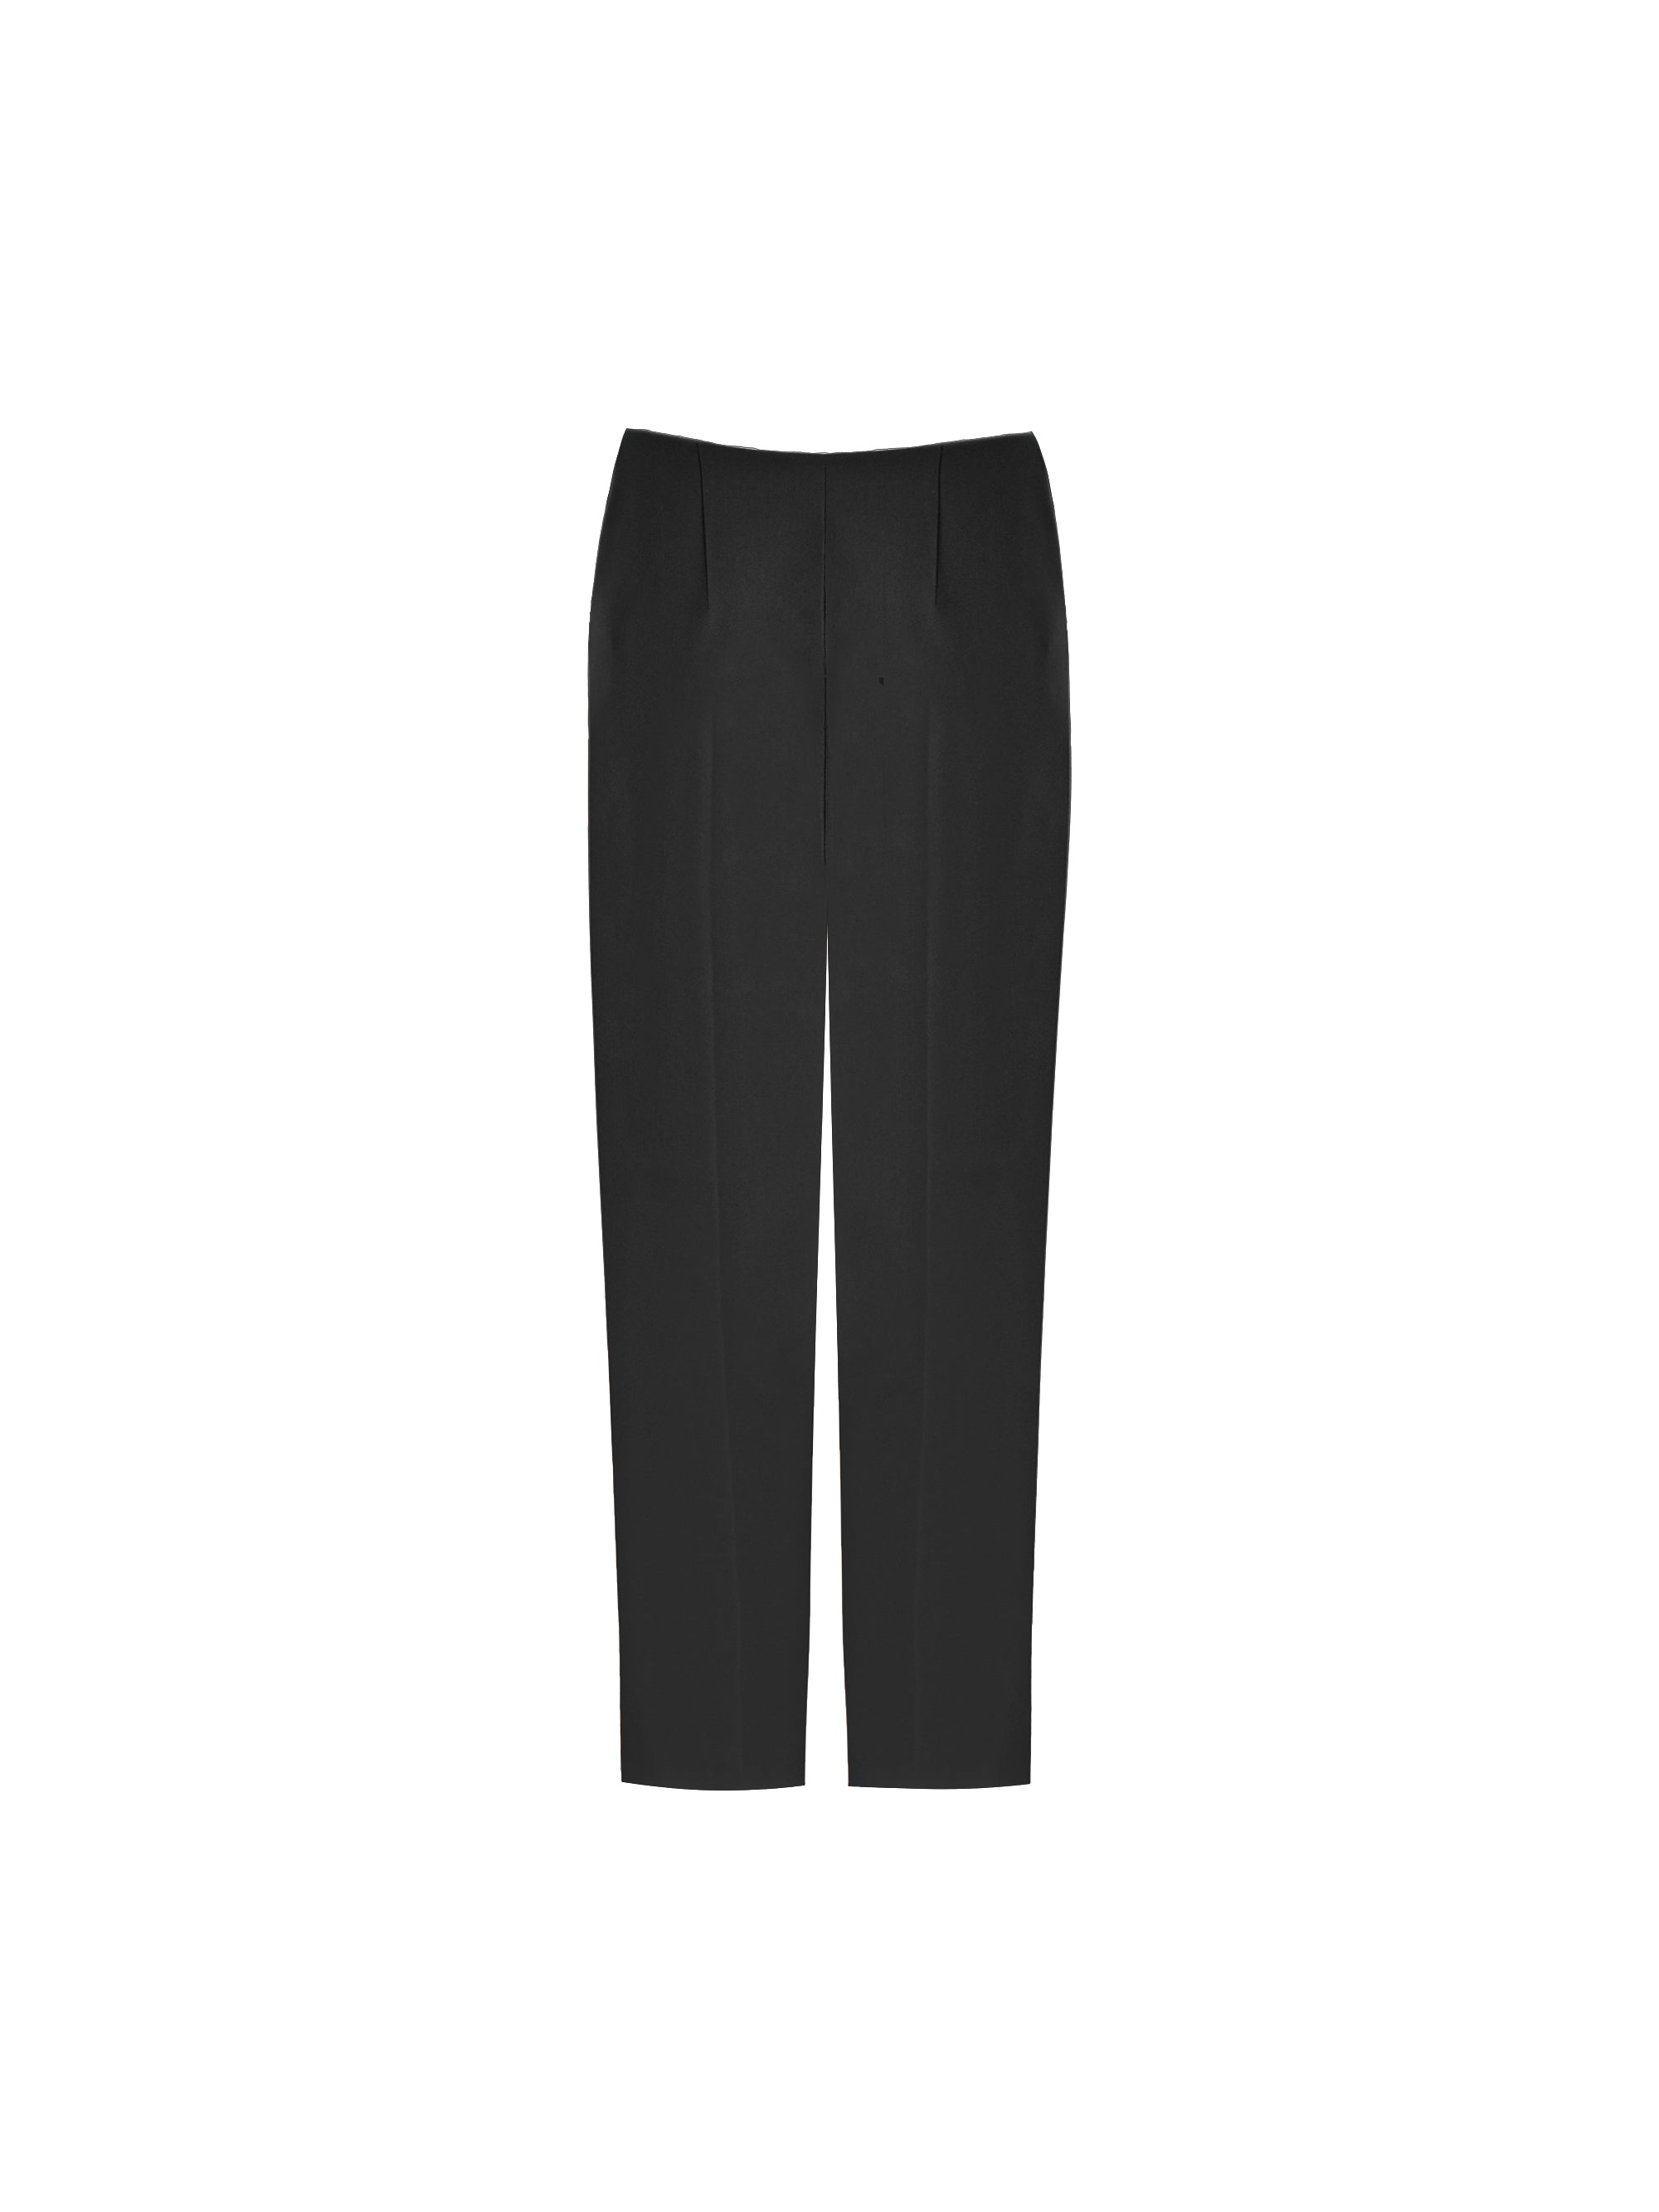 $890 The Row Women Black Stretch Side Zip Pull-On Dress Pants Trousers Size  6 | eBay